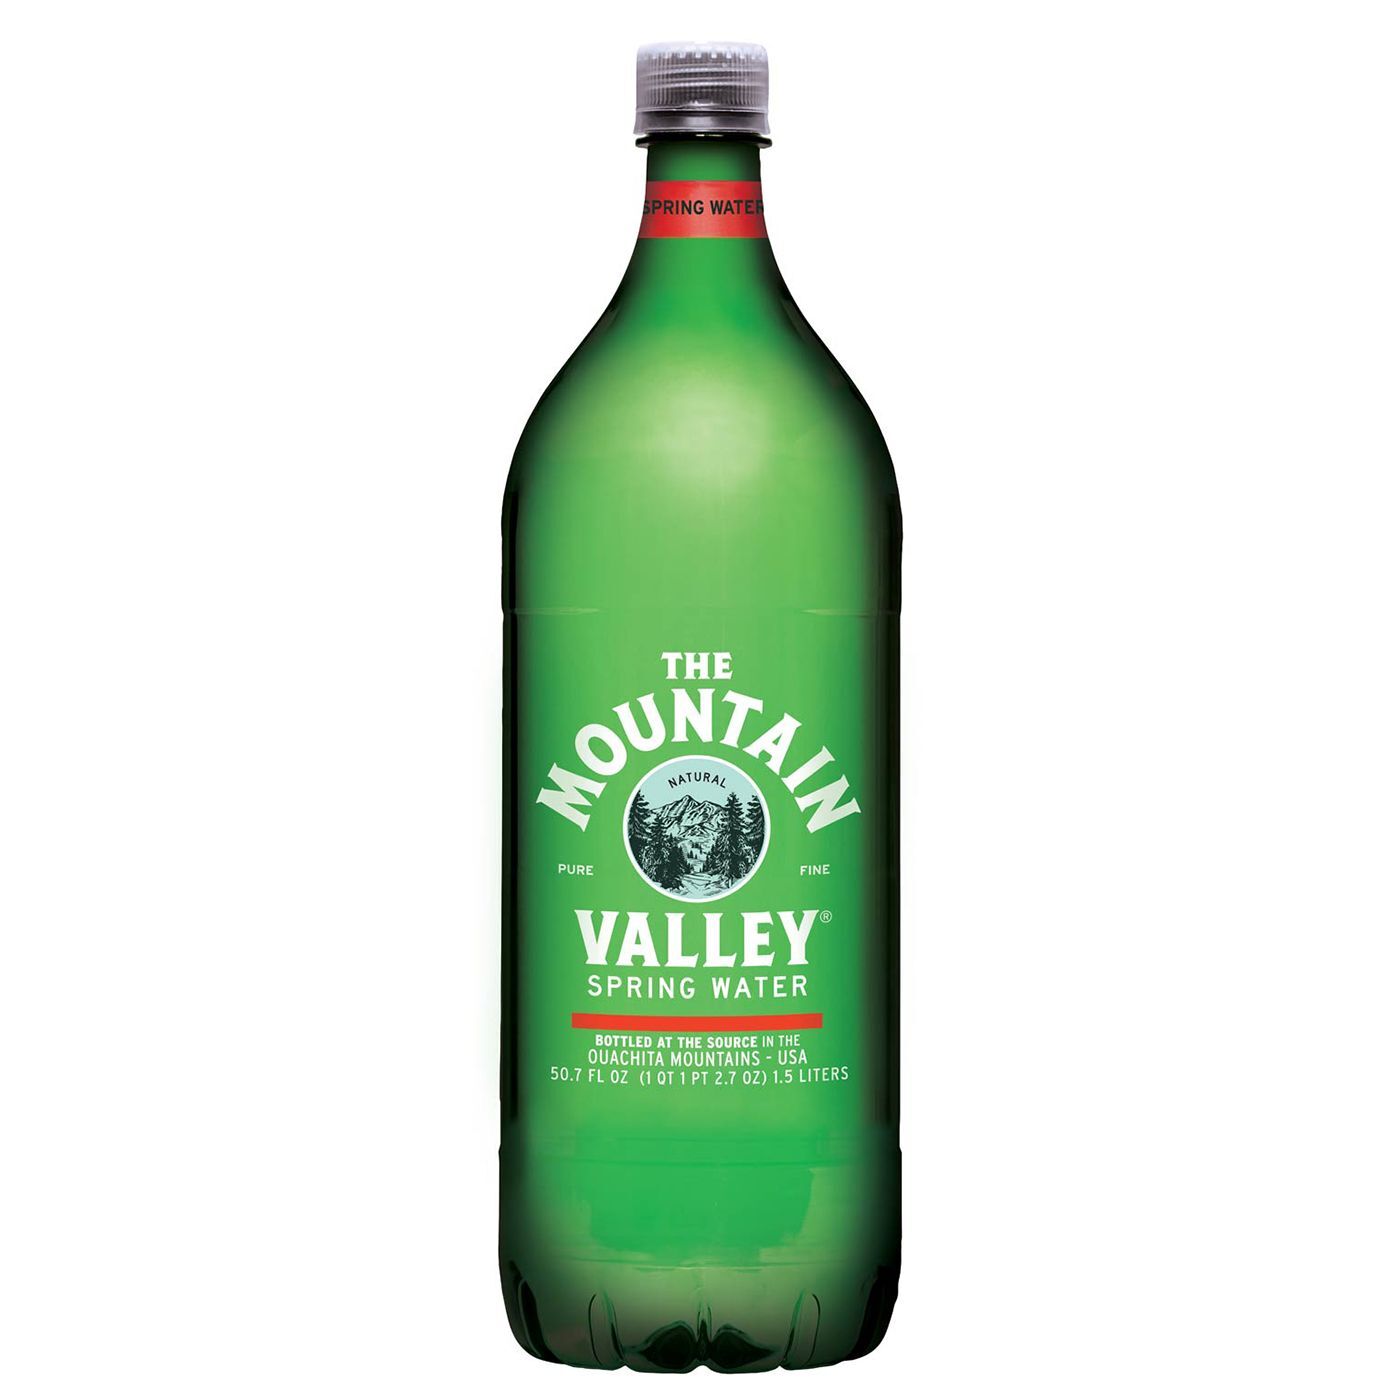 Mountain Valley Spring Water in 1.5 liter plastic bottles